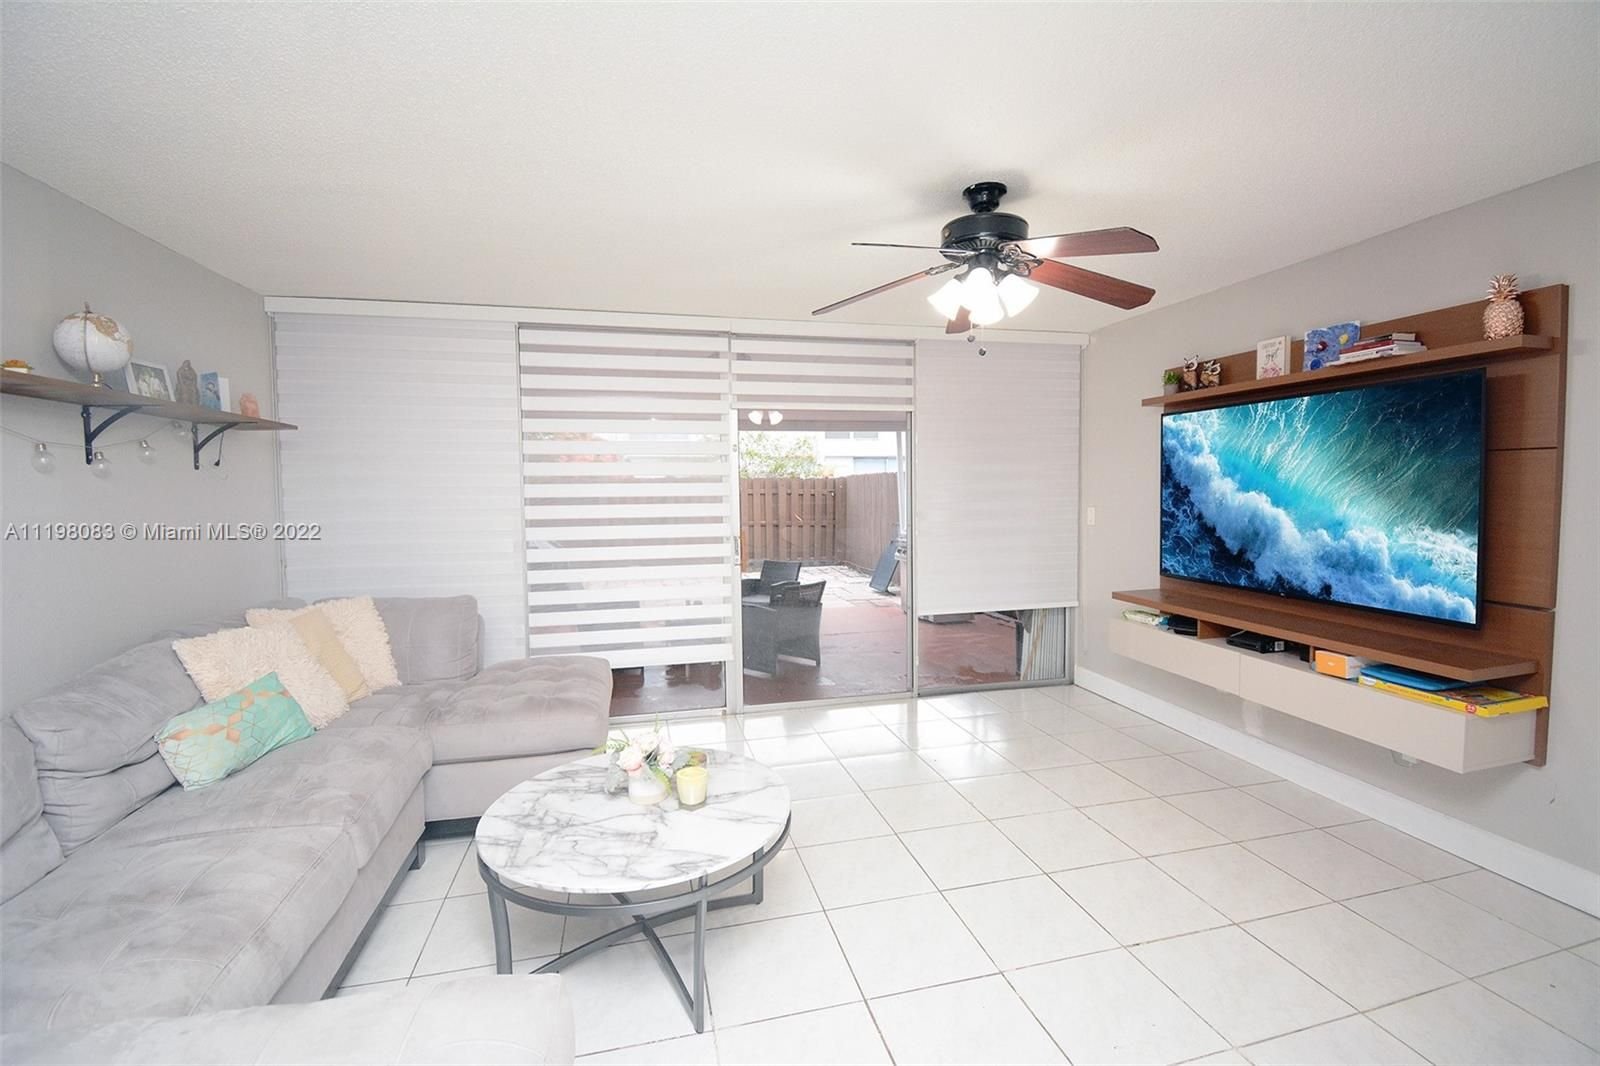 Real estate property located at 13849 84th St #205, Miami-Dade County, Miami, FL